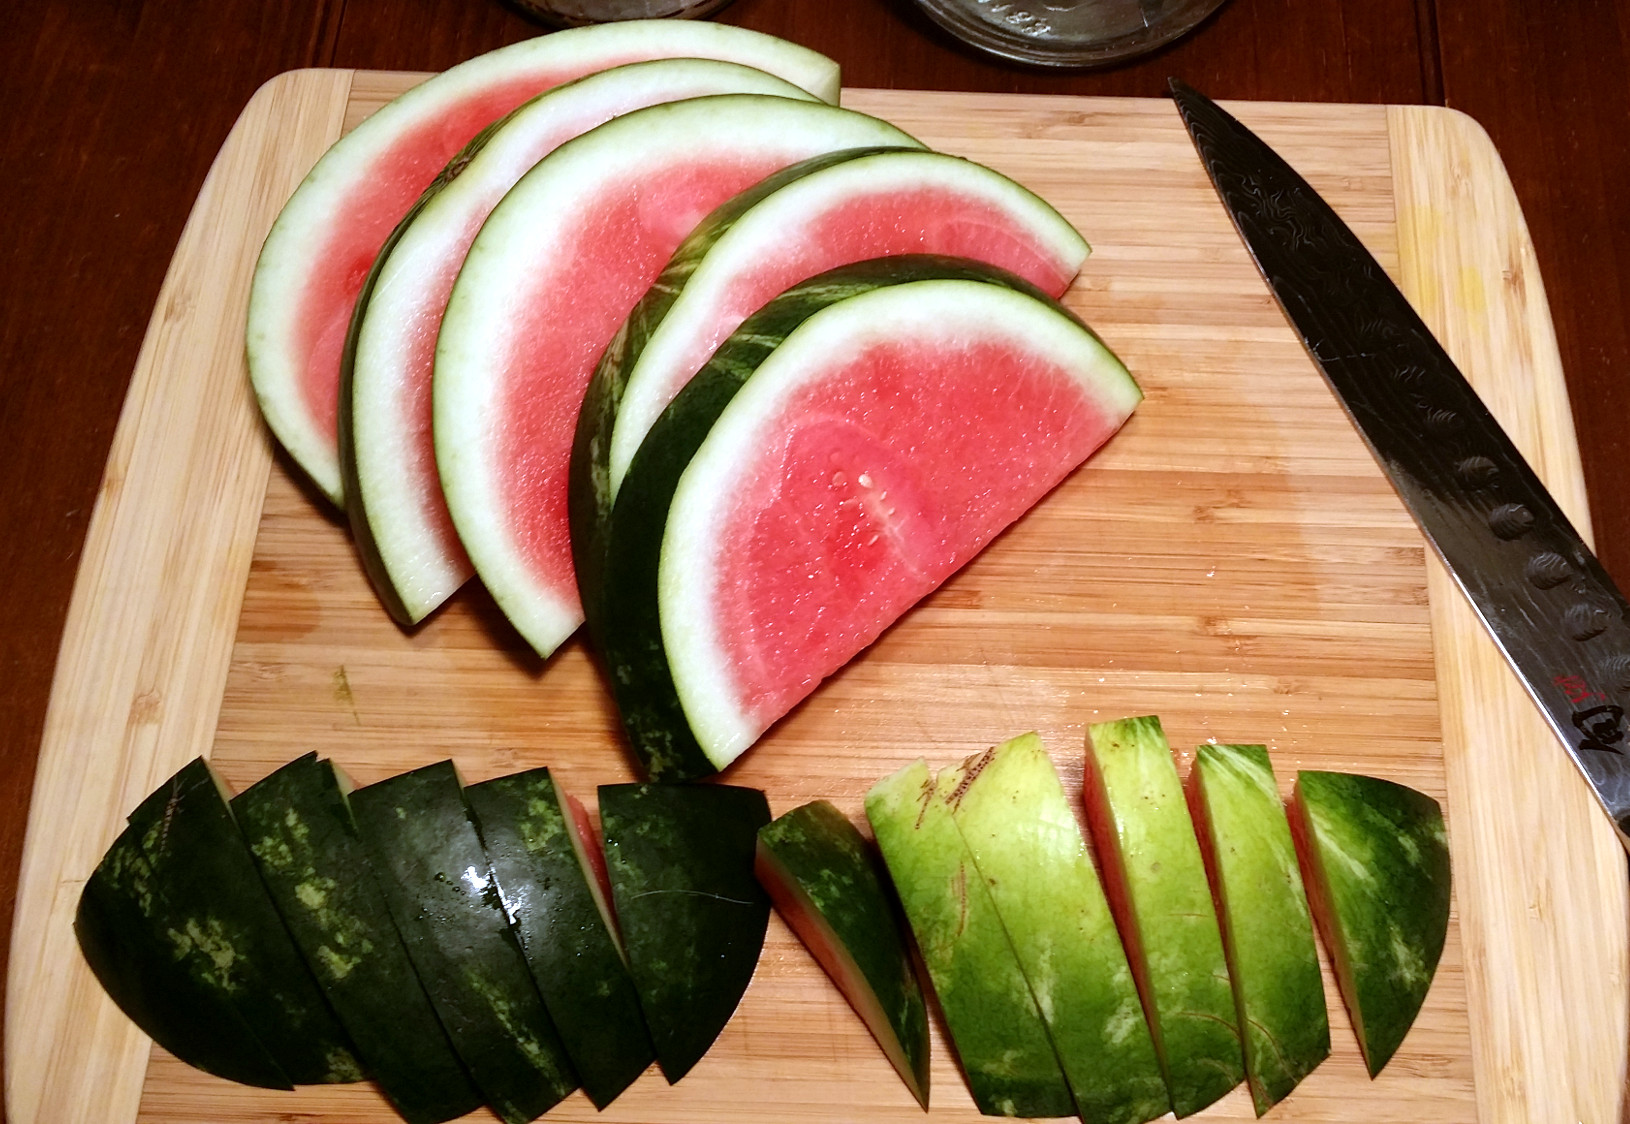 5 watermelon slices